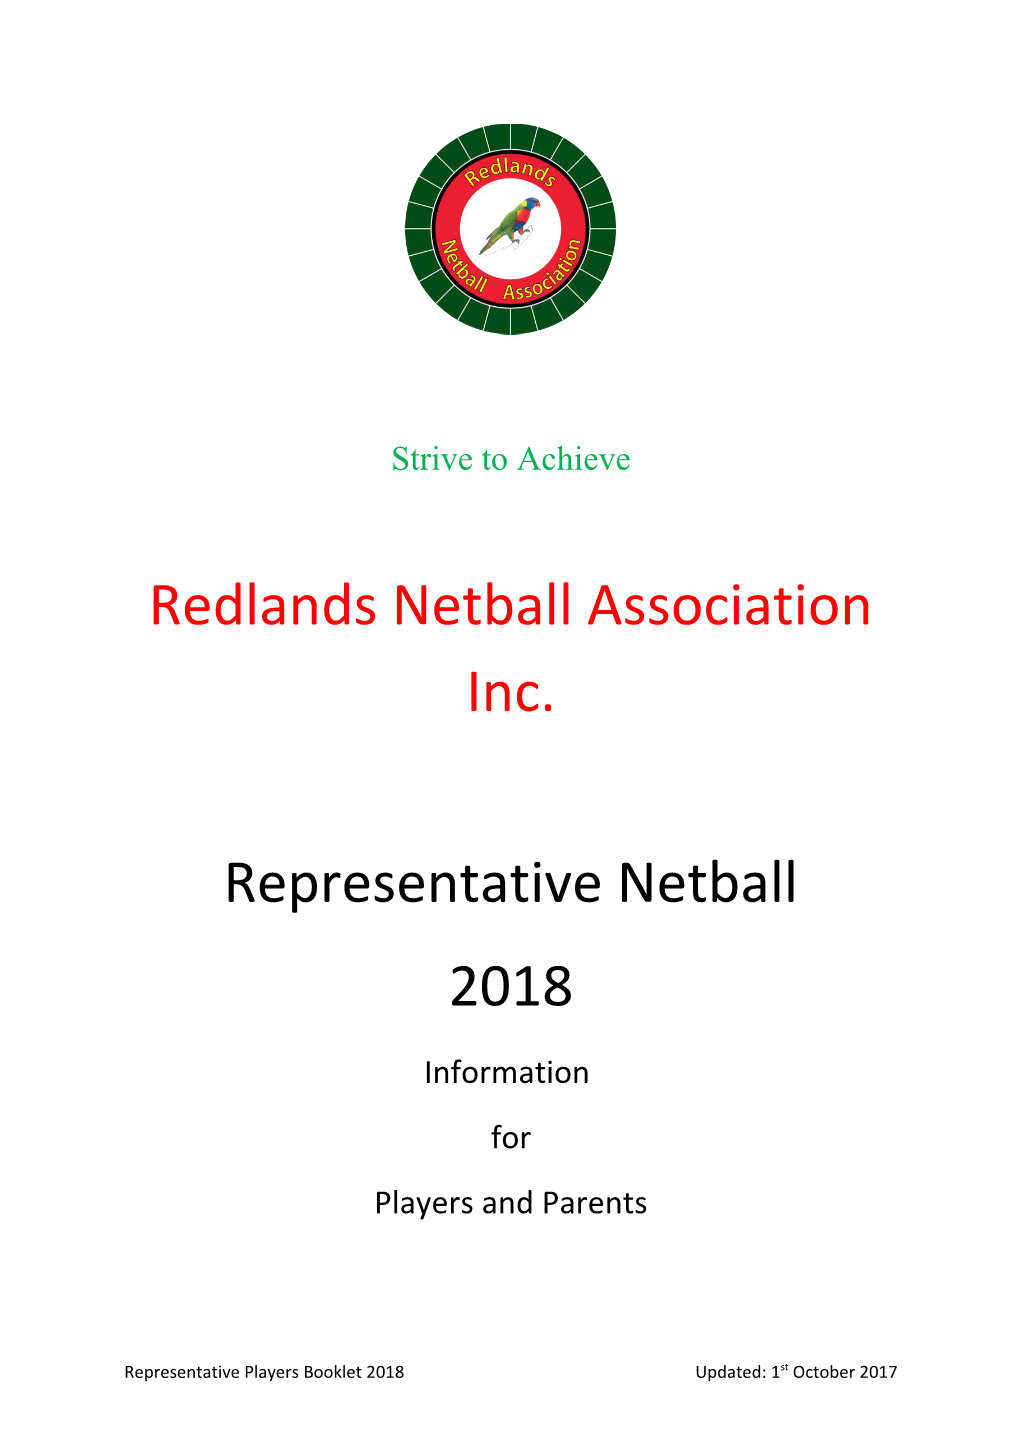 Redlands Netball Association Inc